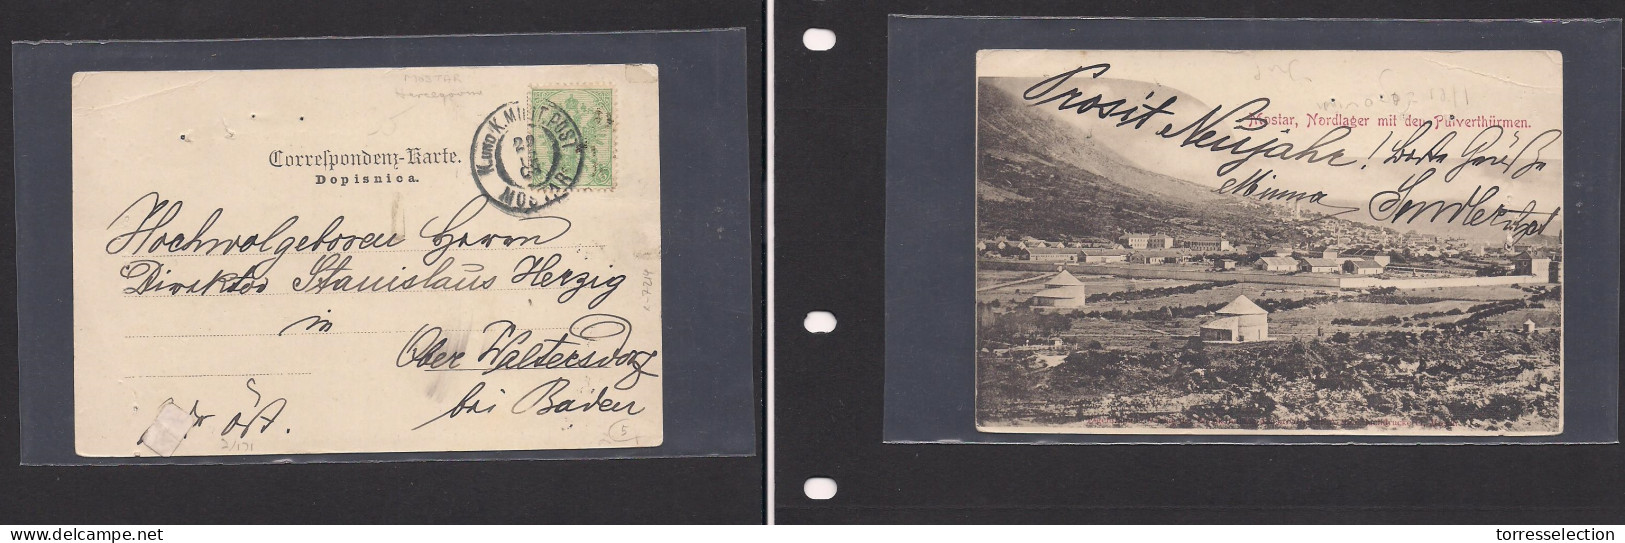 BOSNIA. Bosnia - Cover 1908 Mit Post Fkd Card Mostar To Ober Waltersdorf, Baden, Better Fine Print Stamp. Easy Deal. XSA - Bosnia And Herzegovina